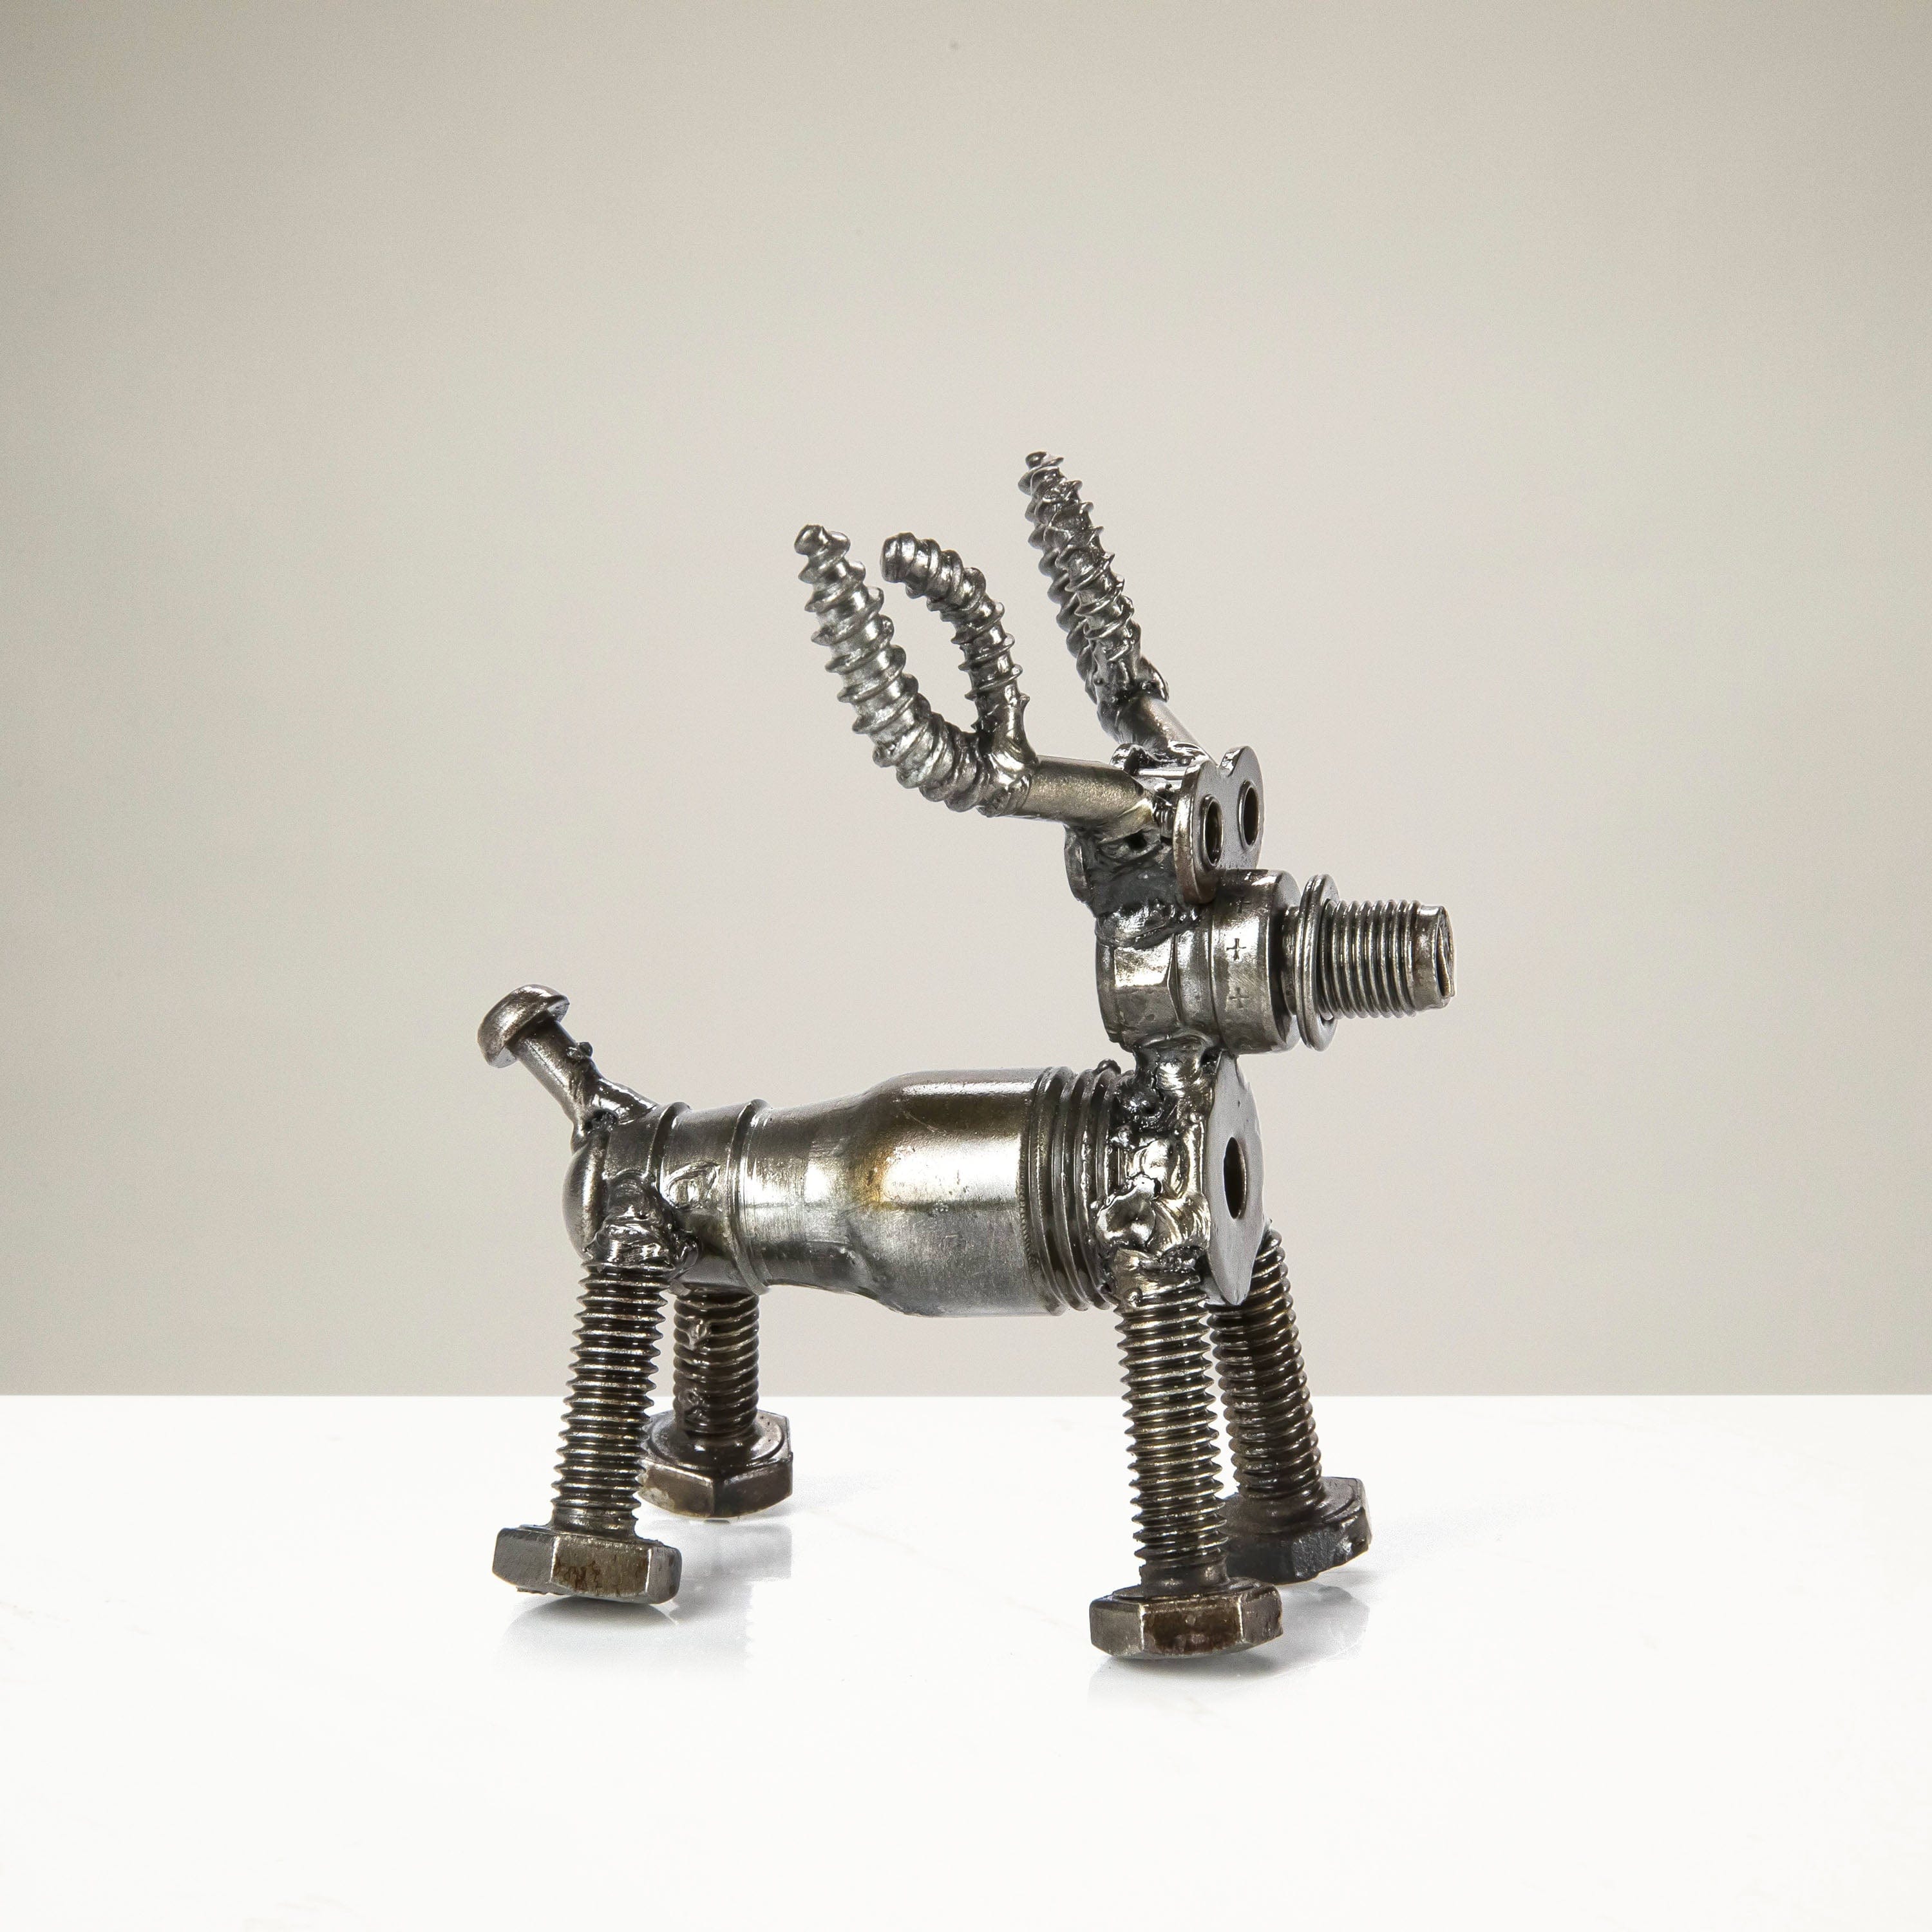 Kalifano Recycled Metal Art Reindeer Inspired Recycled Metal Sculpture RMS-100RD-N